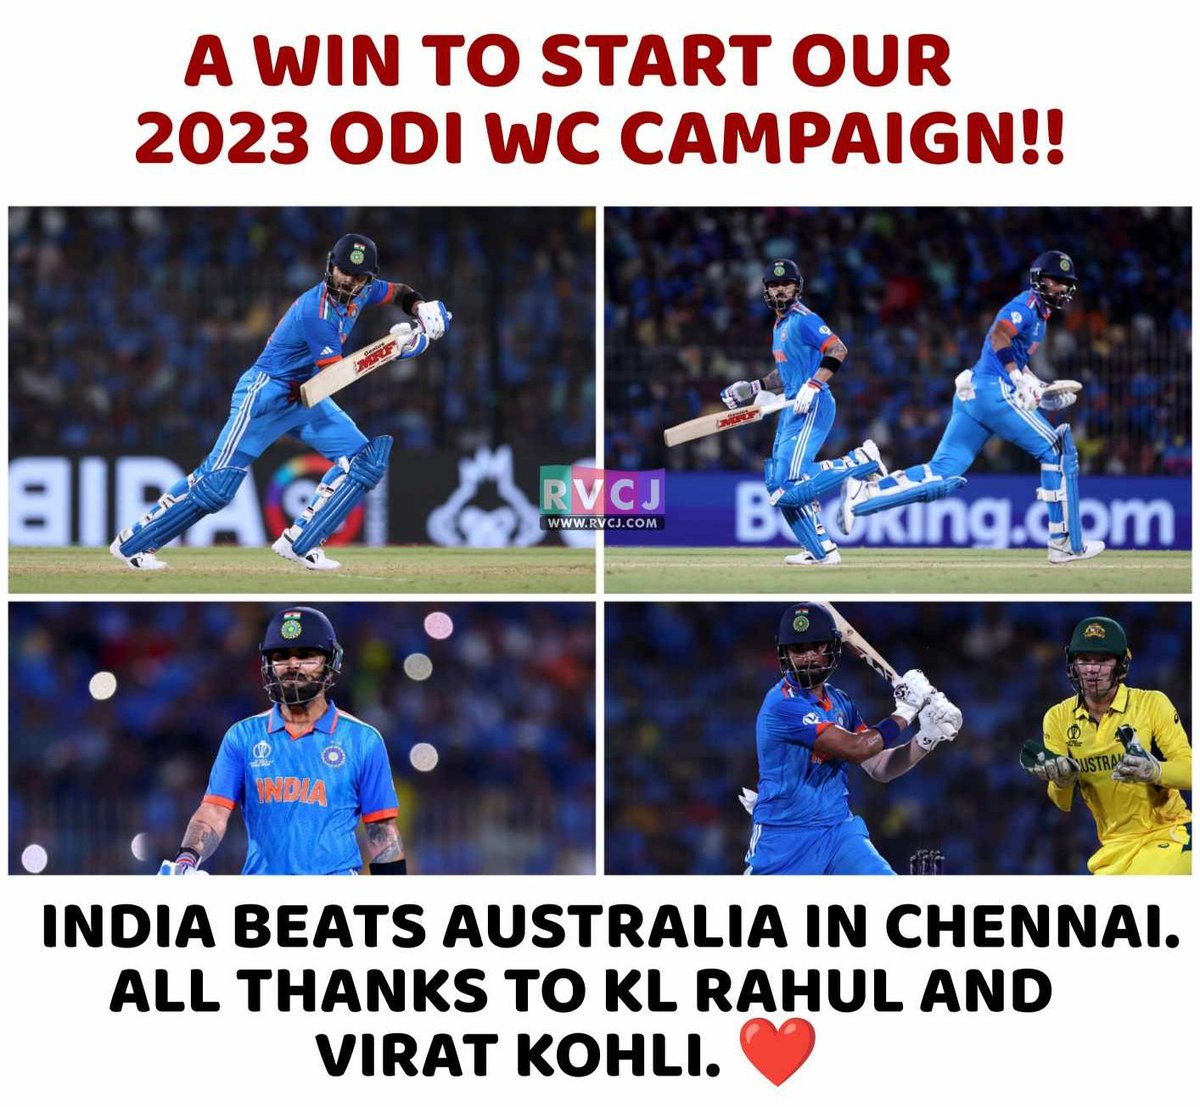 INDIA wins !!🥳 , Thanks to King Virat and KL Rahul 🔥🇮🇳
#INDvAUS #ViratKohli #KLRahul #RohitSharma #wwc2023 #WorldCup2023 #Israel #hamasattack  #IndiaStandWithIsrael